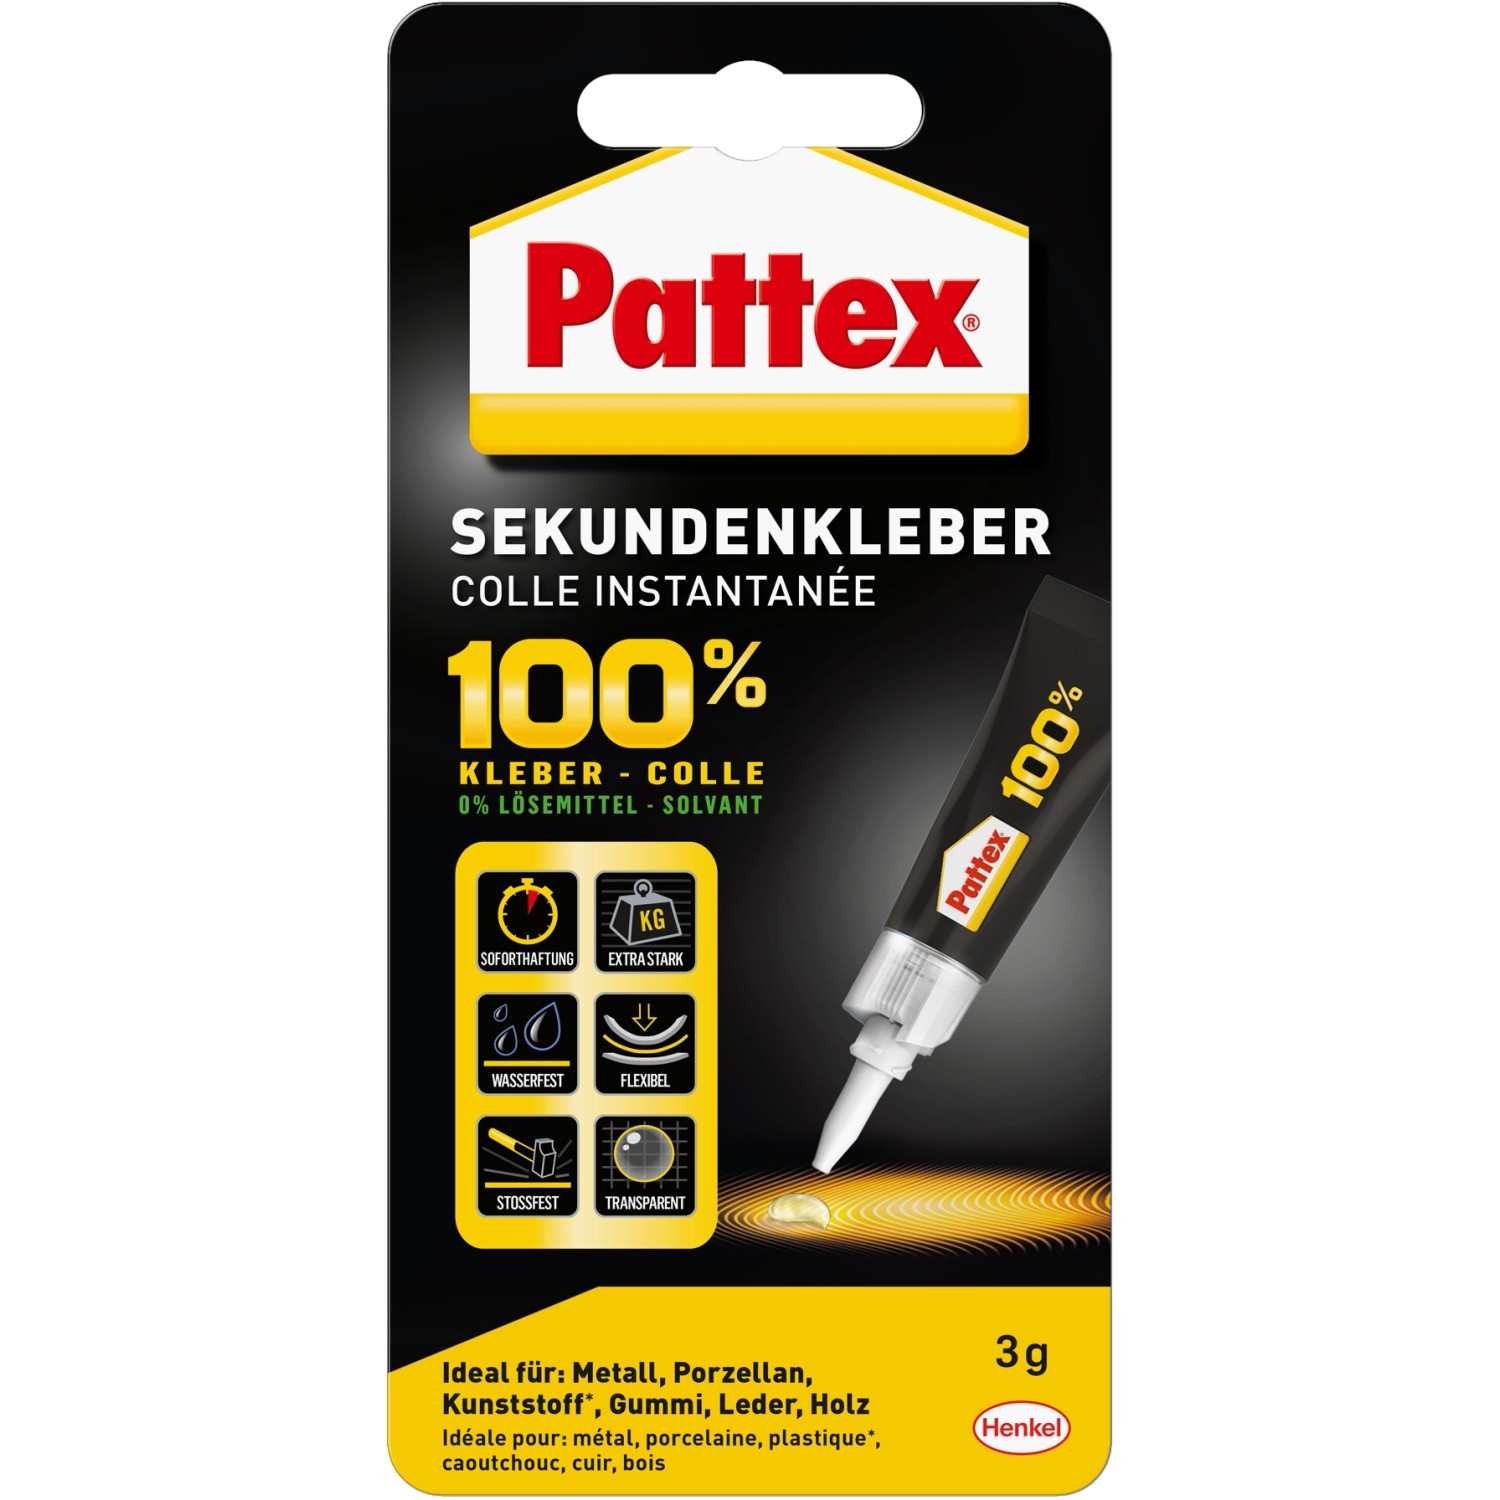 Pattex Flüssigkleber 100% Sekundenkleber Transparent 3g